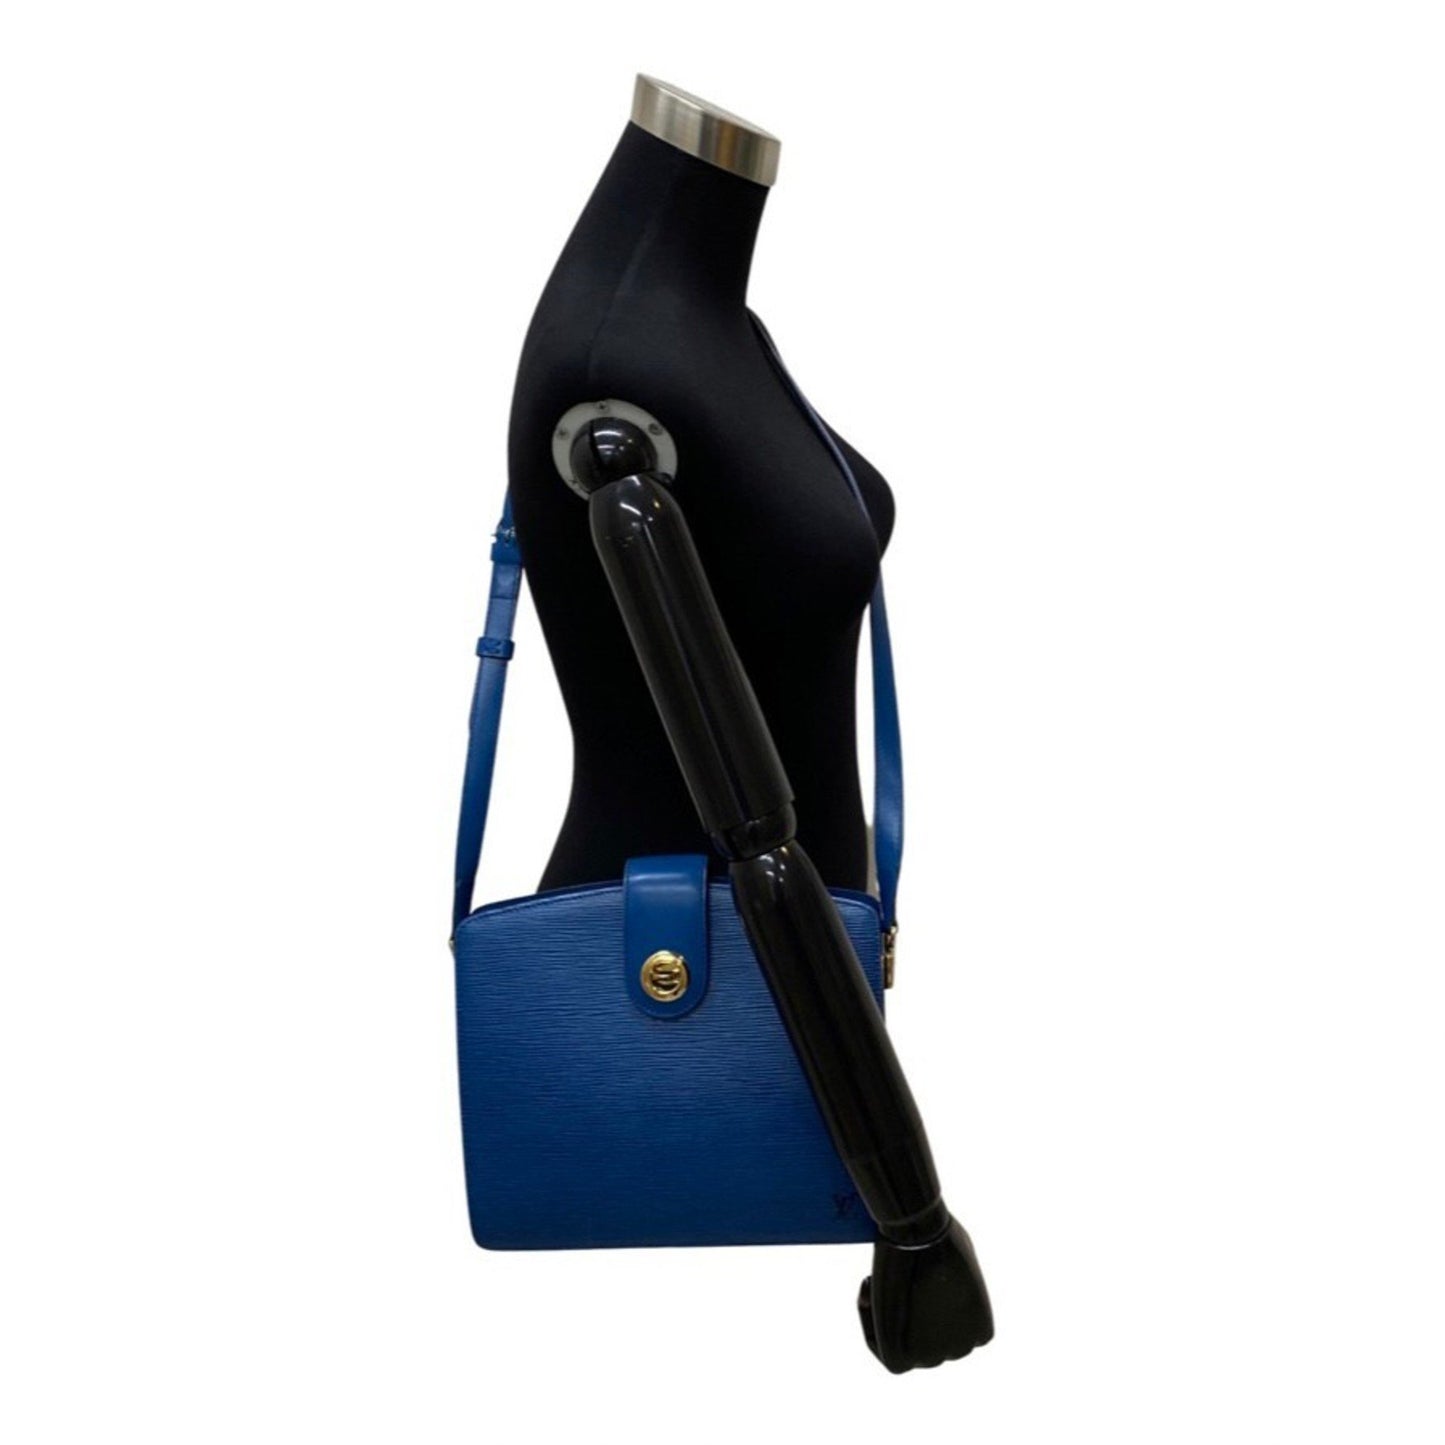 Louis Vuitton Women's Blue Leather Designer Handbag in Blue